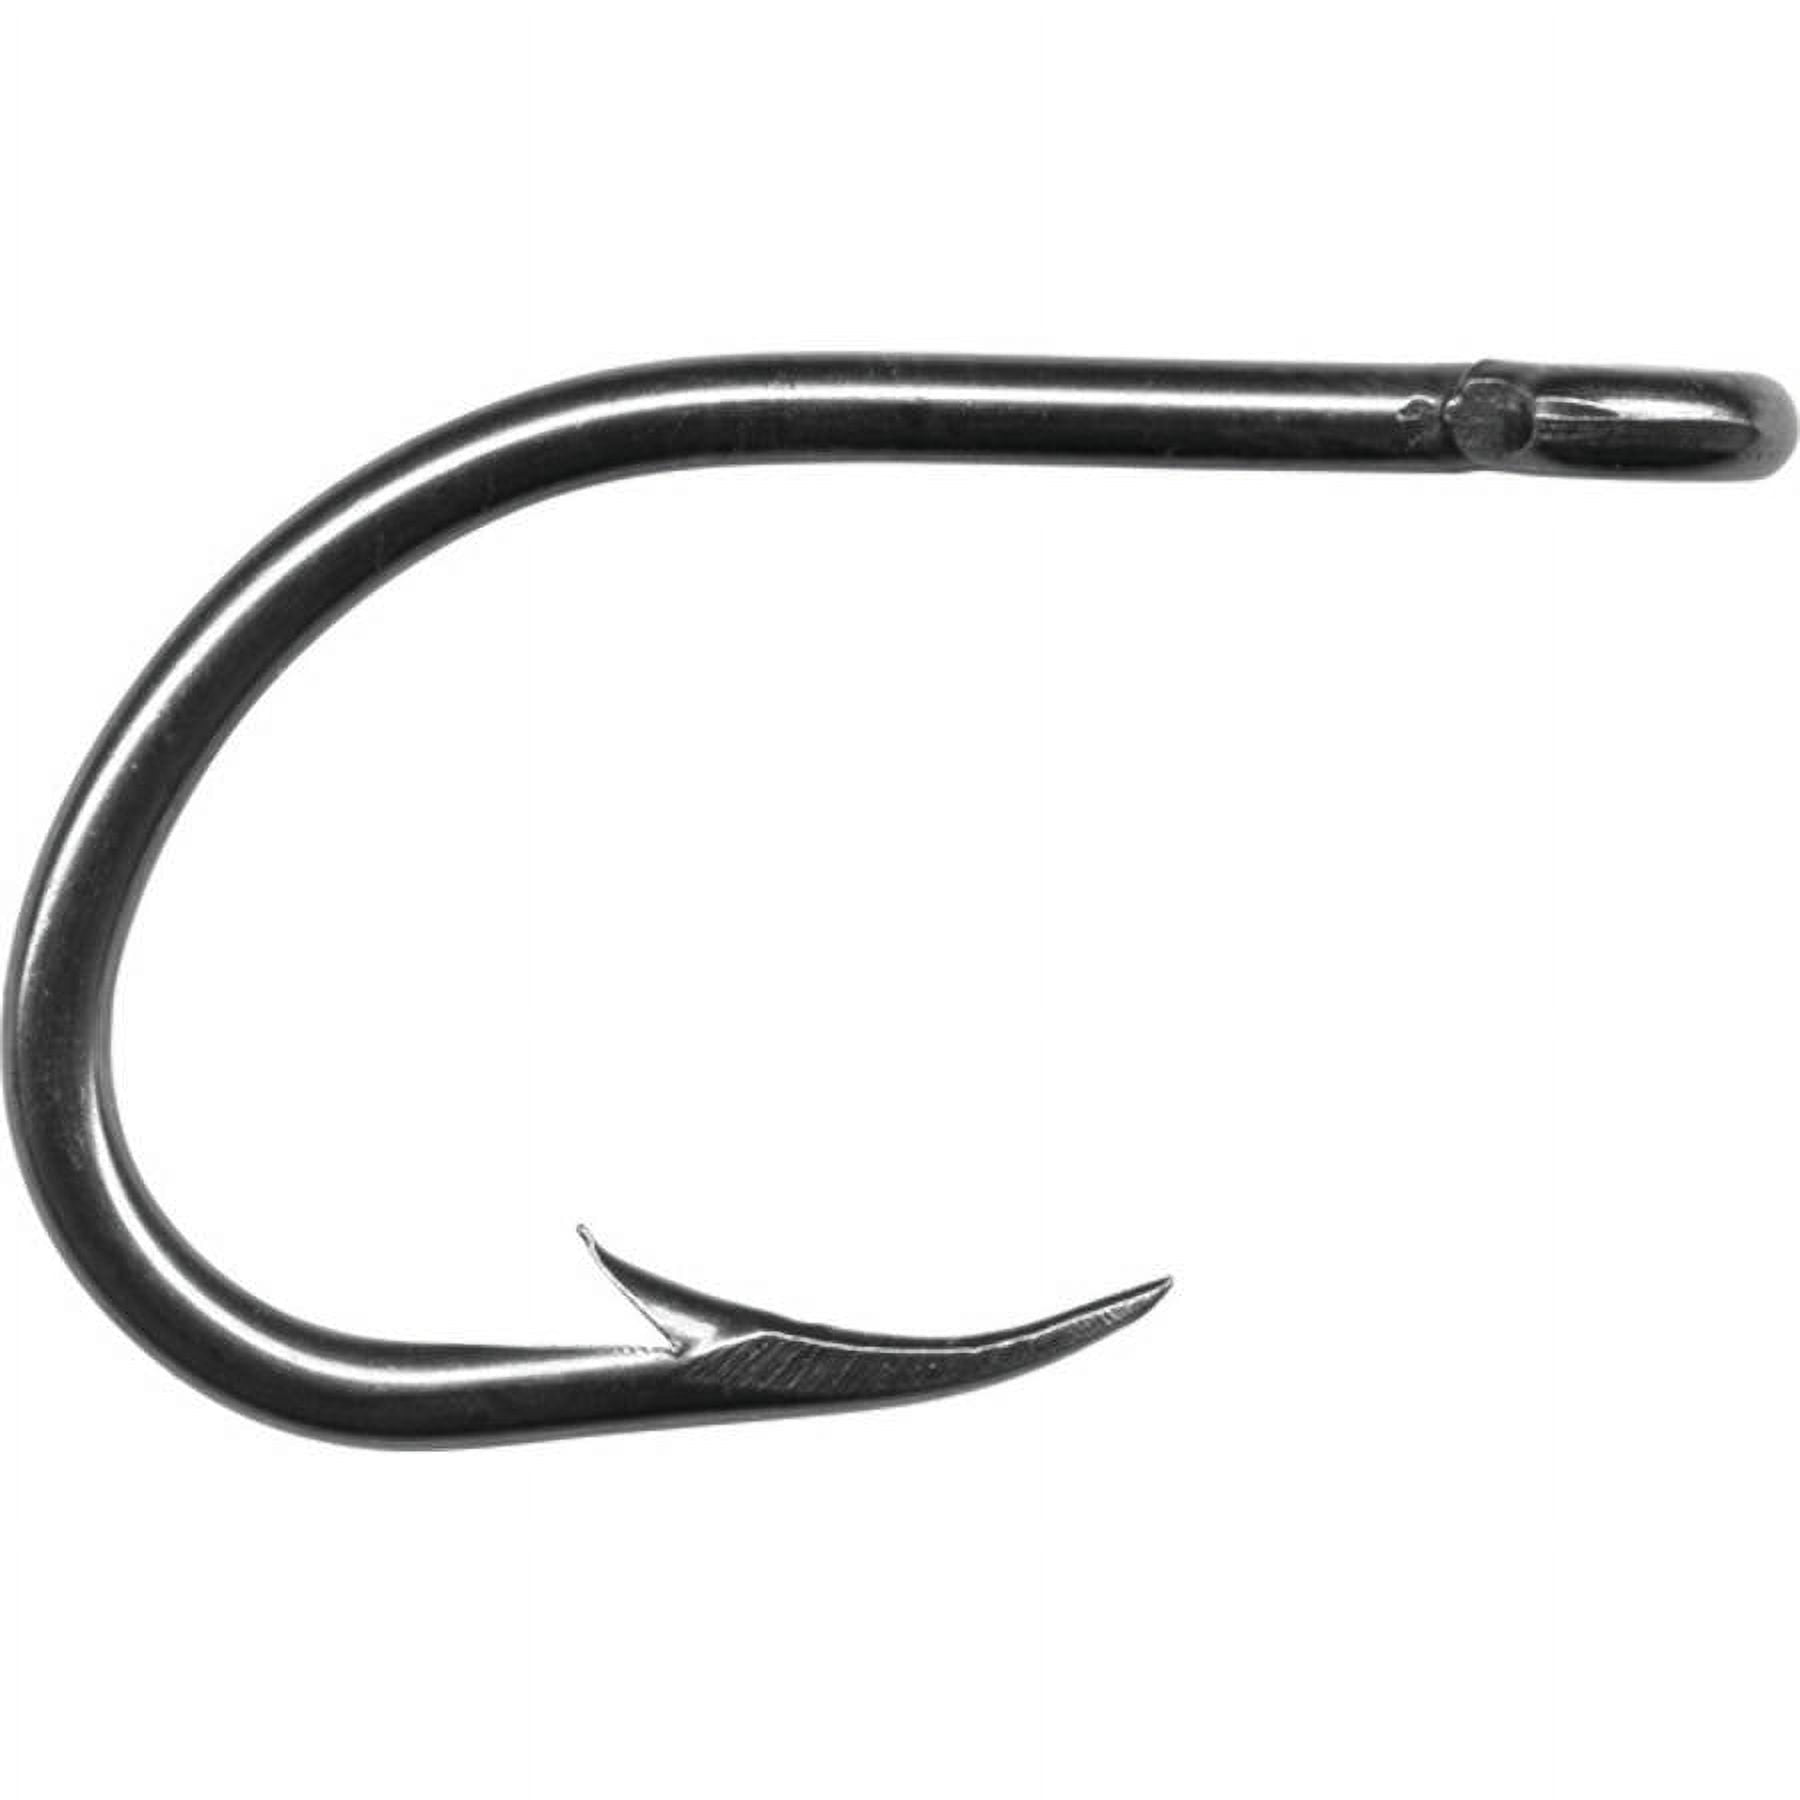 SAMSU BLACK NICKEL Baitholder Bait Holder Sz 3/0 Qty 6 Fish Hooks Fishing  Hook $2.59 - PicClick